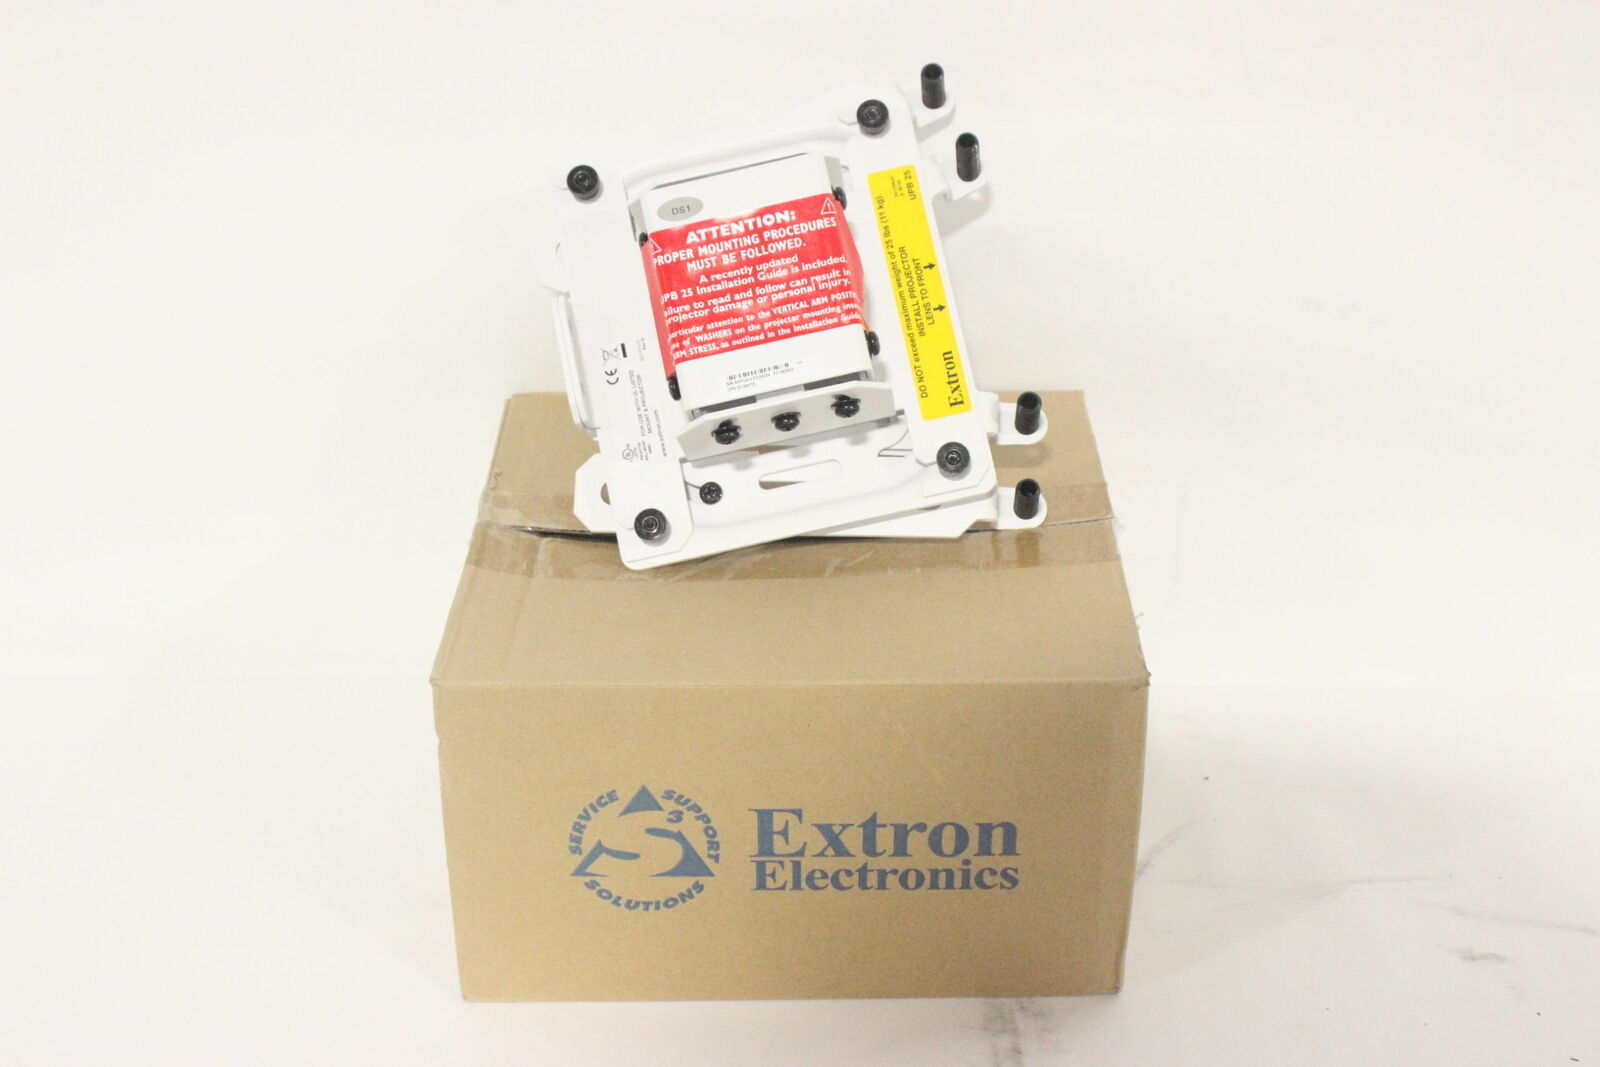 Extron UPB 25 Universal Projector Mounting Bracket (In Original Box) (C1394-6...